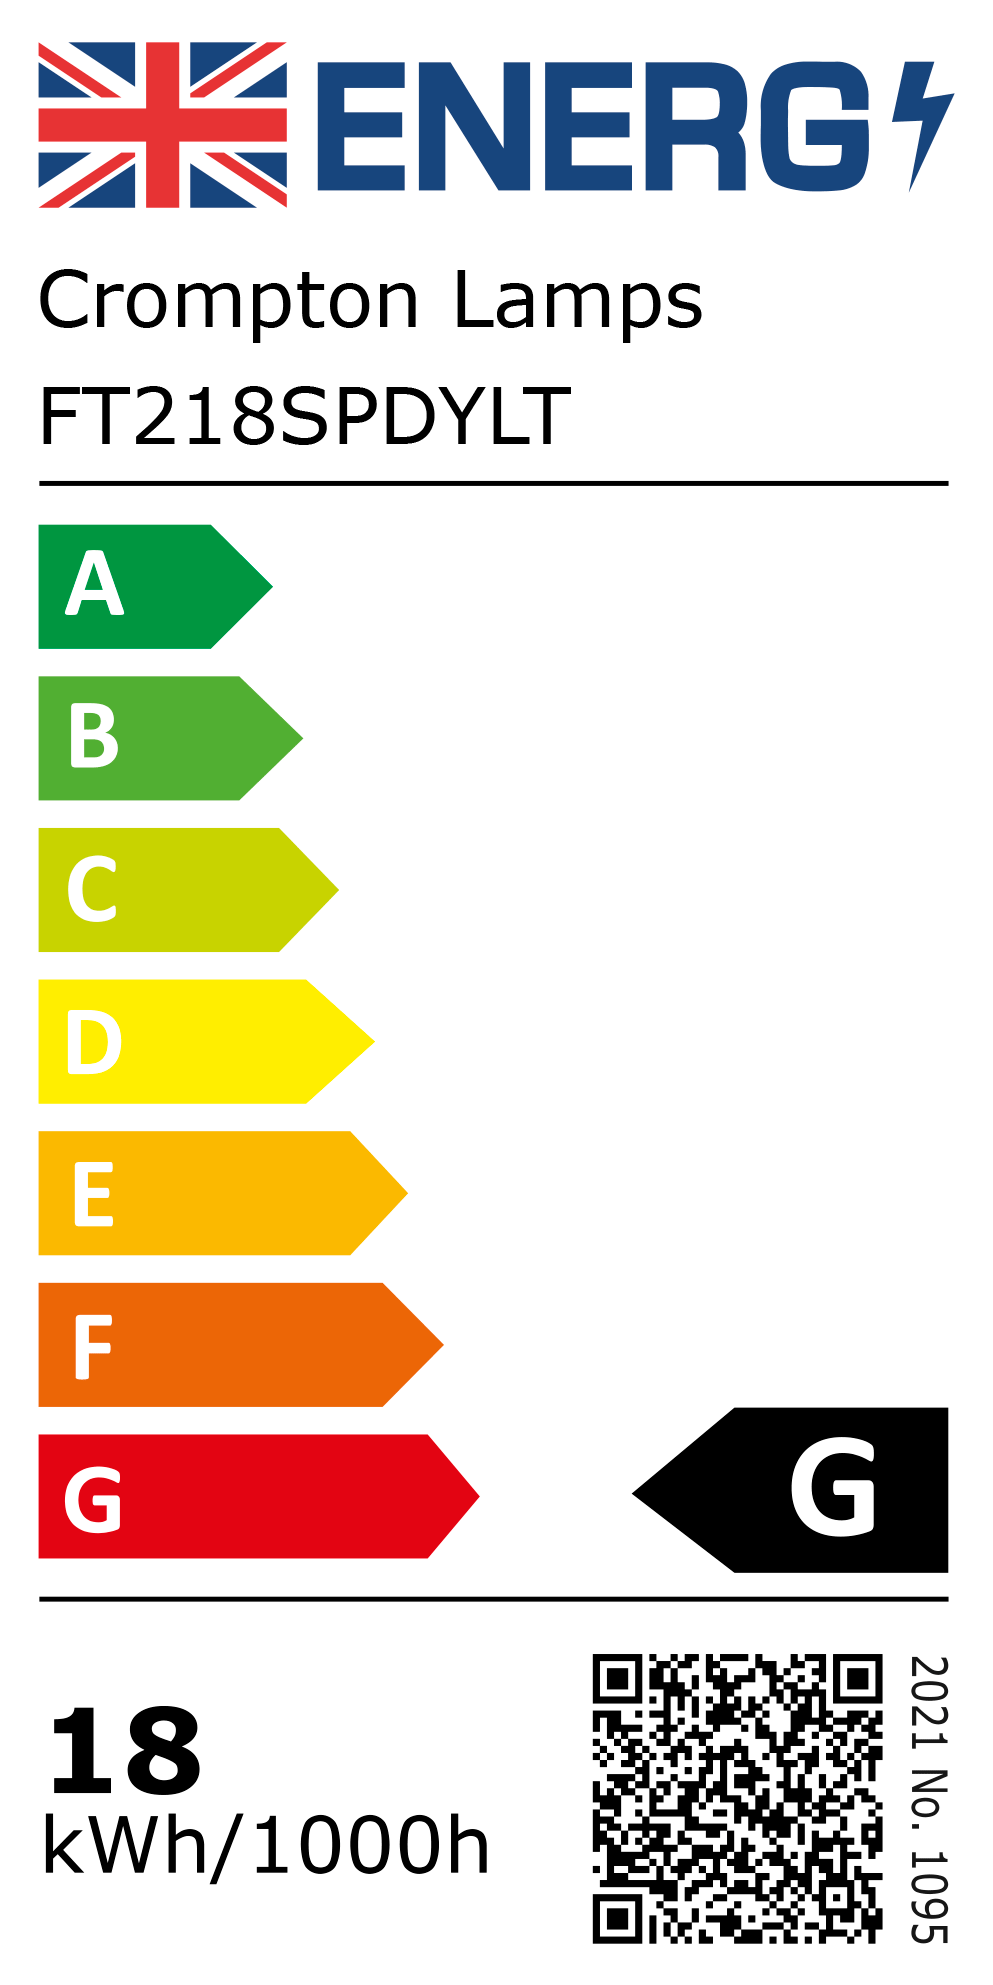 New 2021 Energy Rating Label: Stock Code FT218SPDYLT